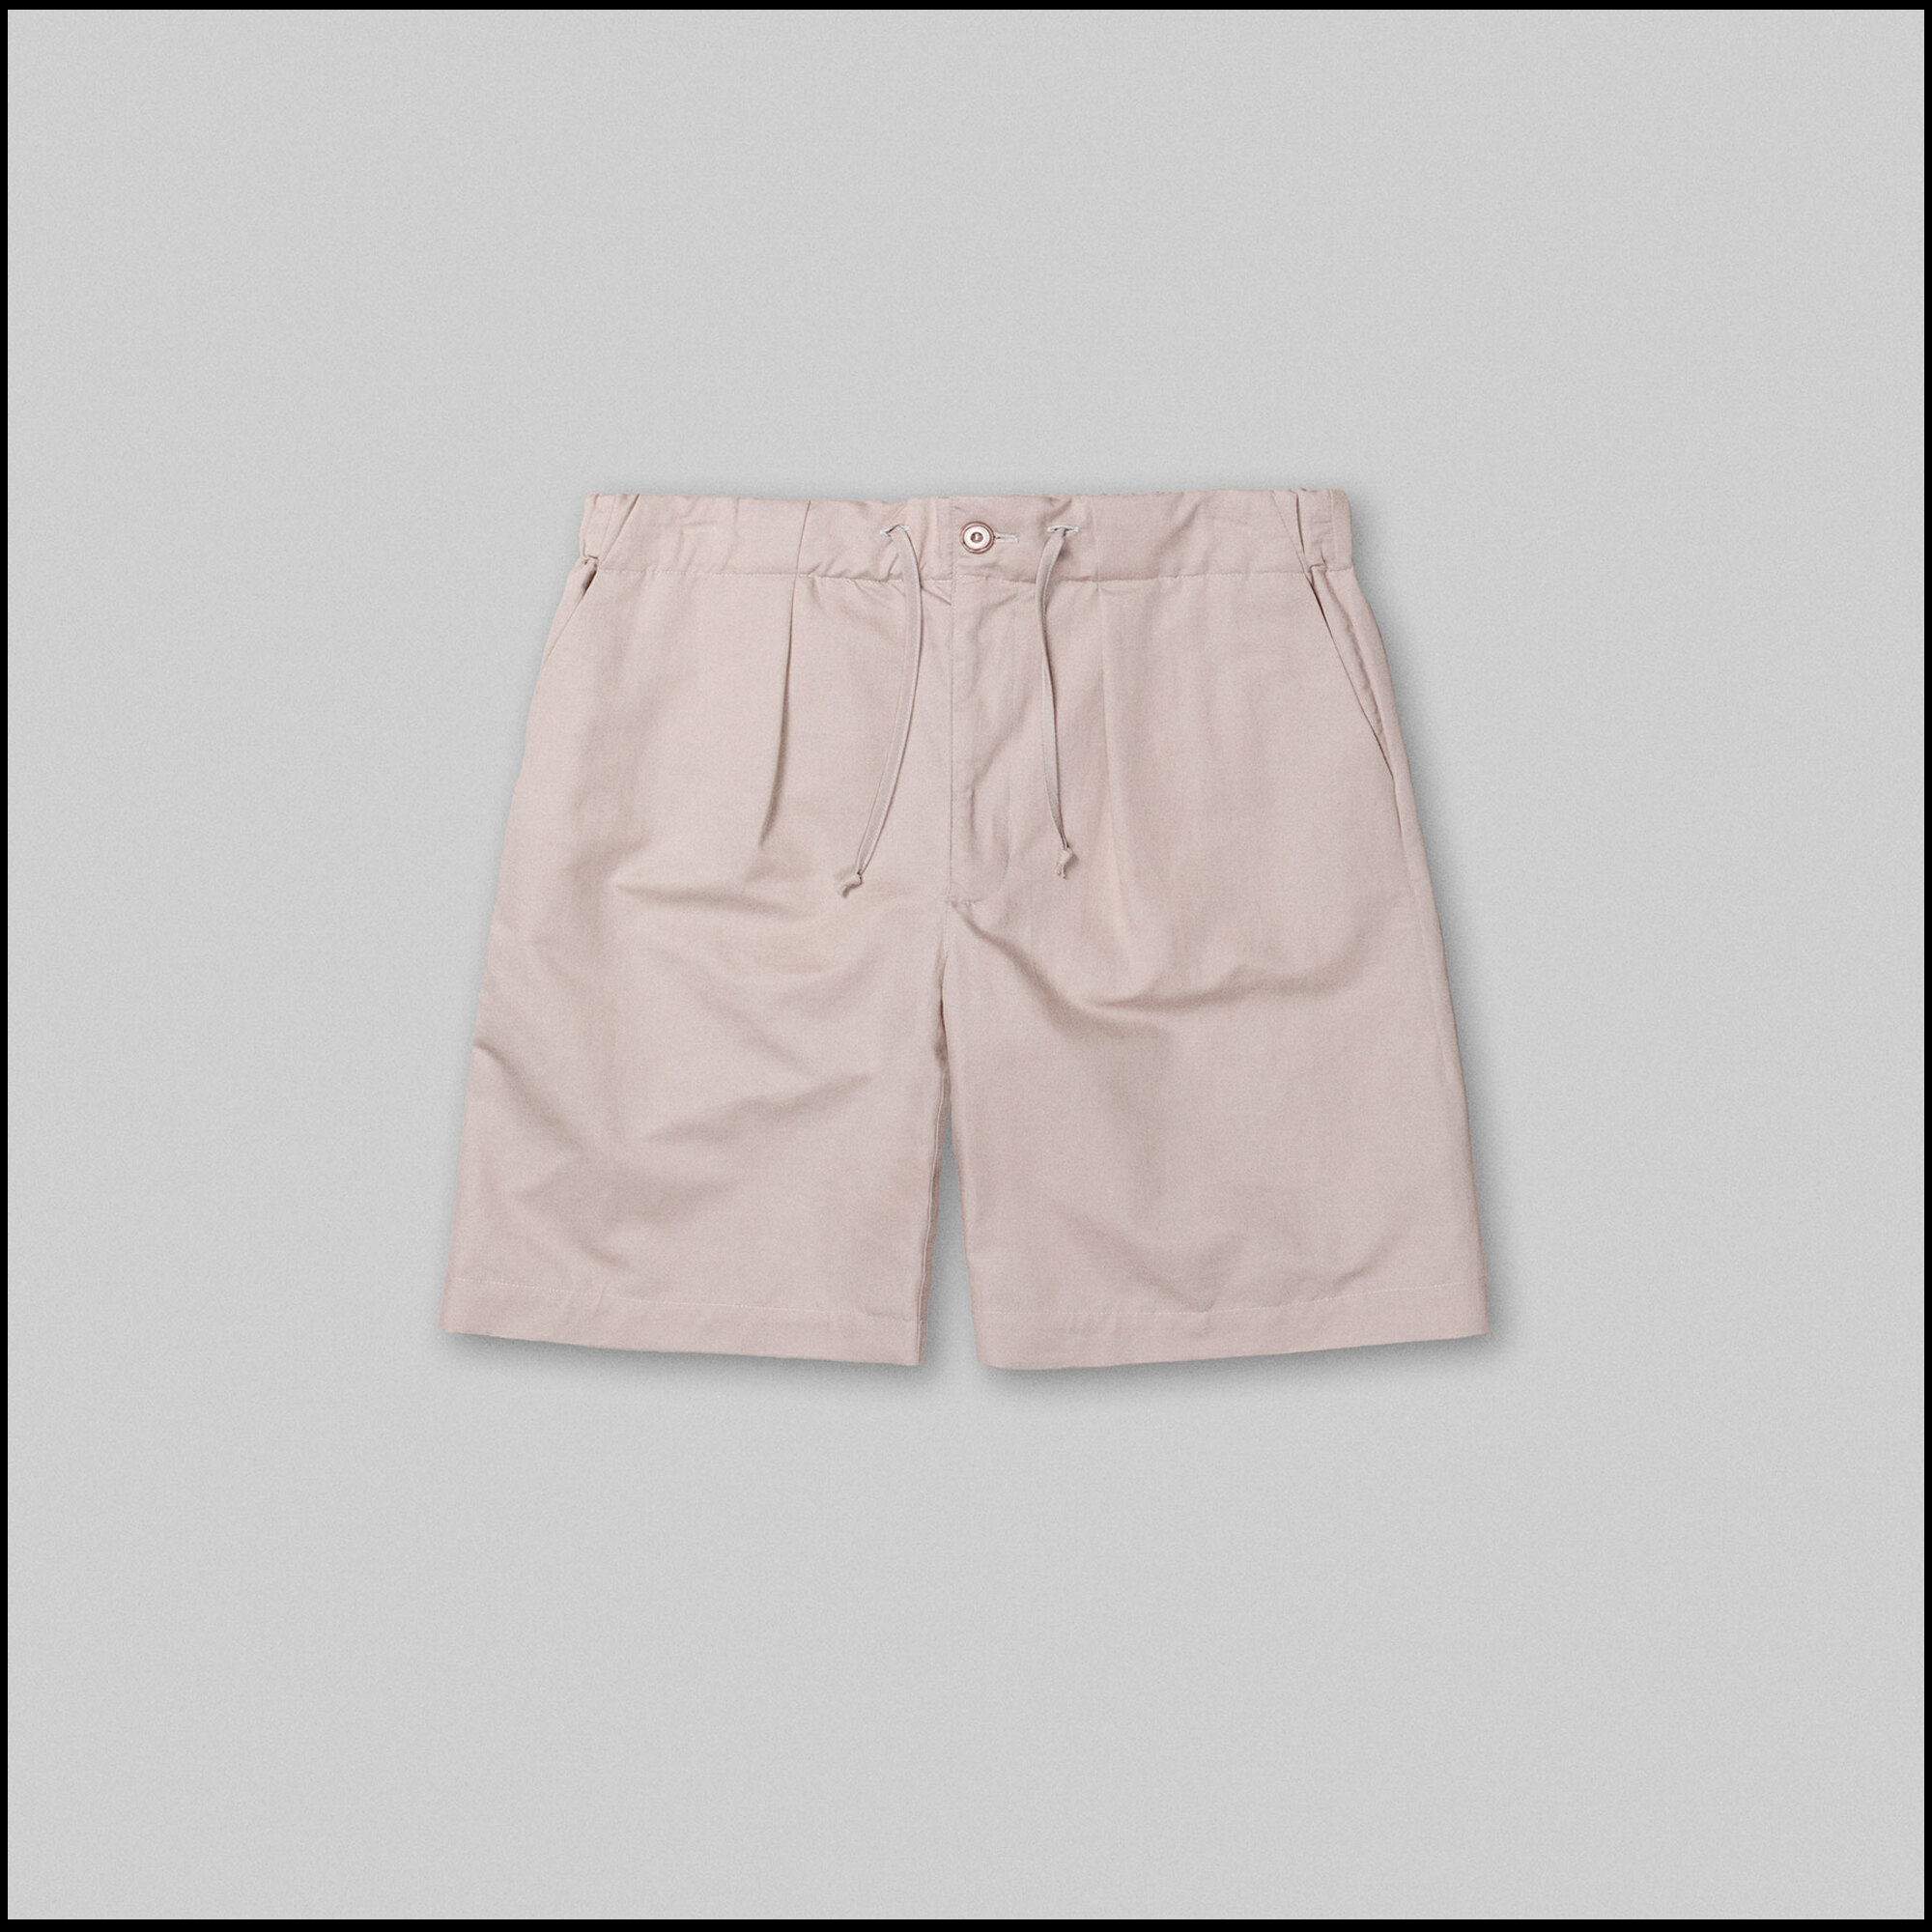 TERRA shorts by Arpenteur in Stone taffetas color